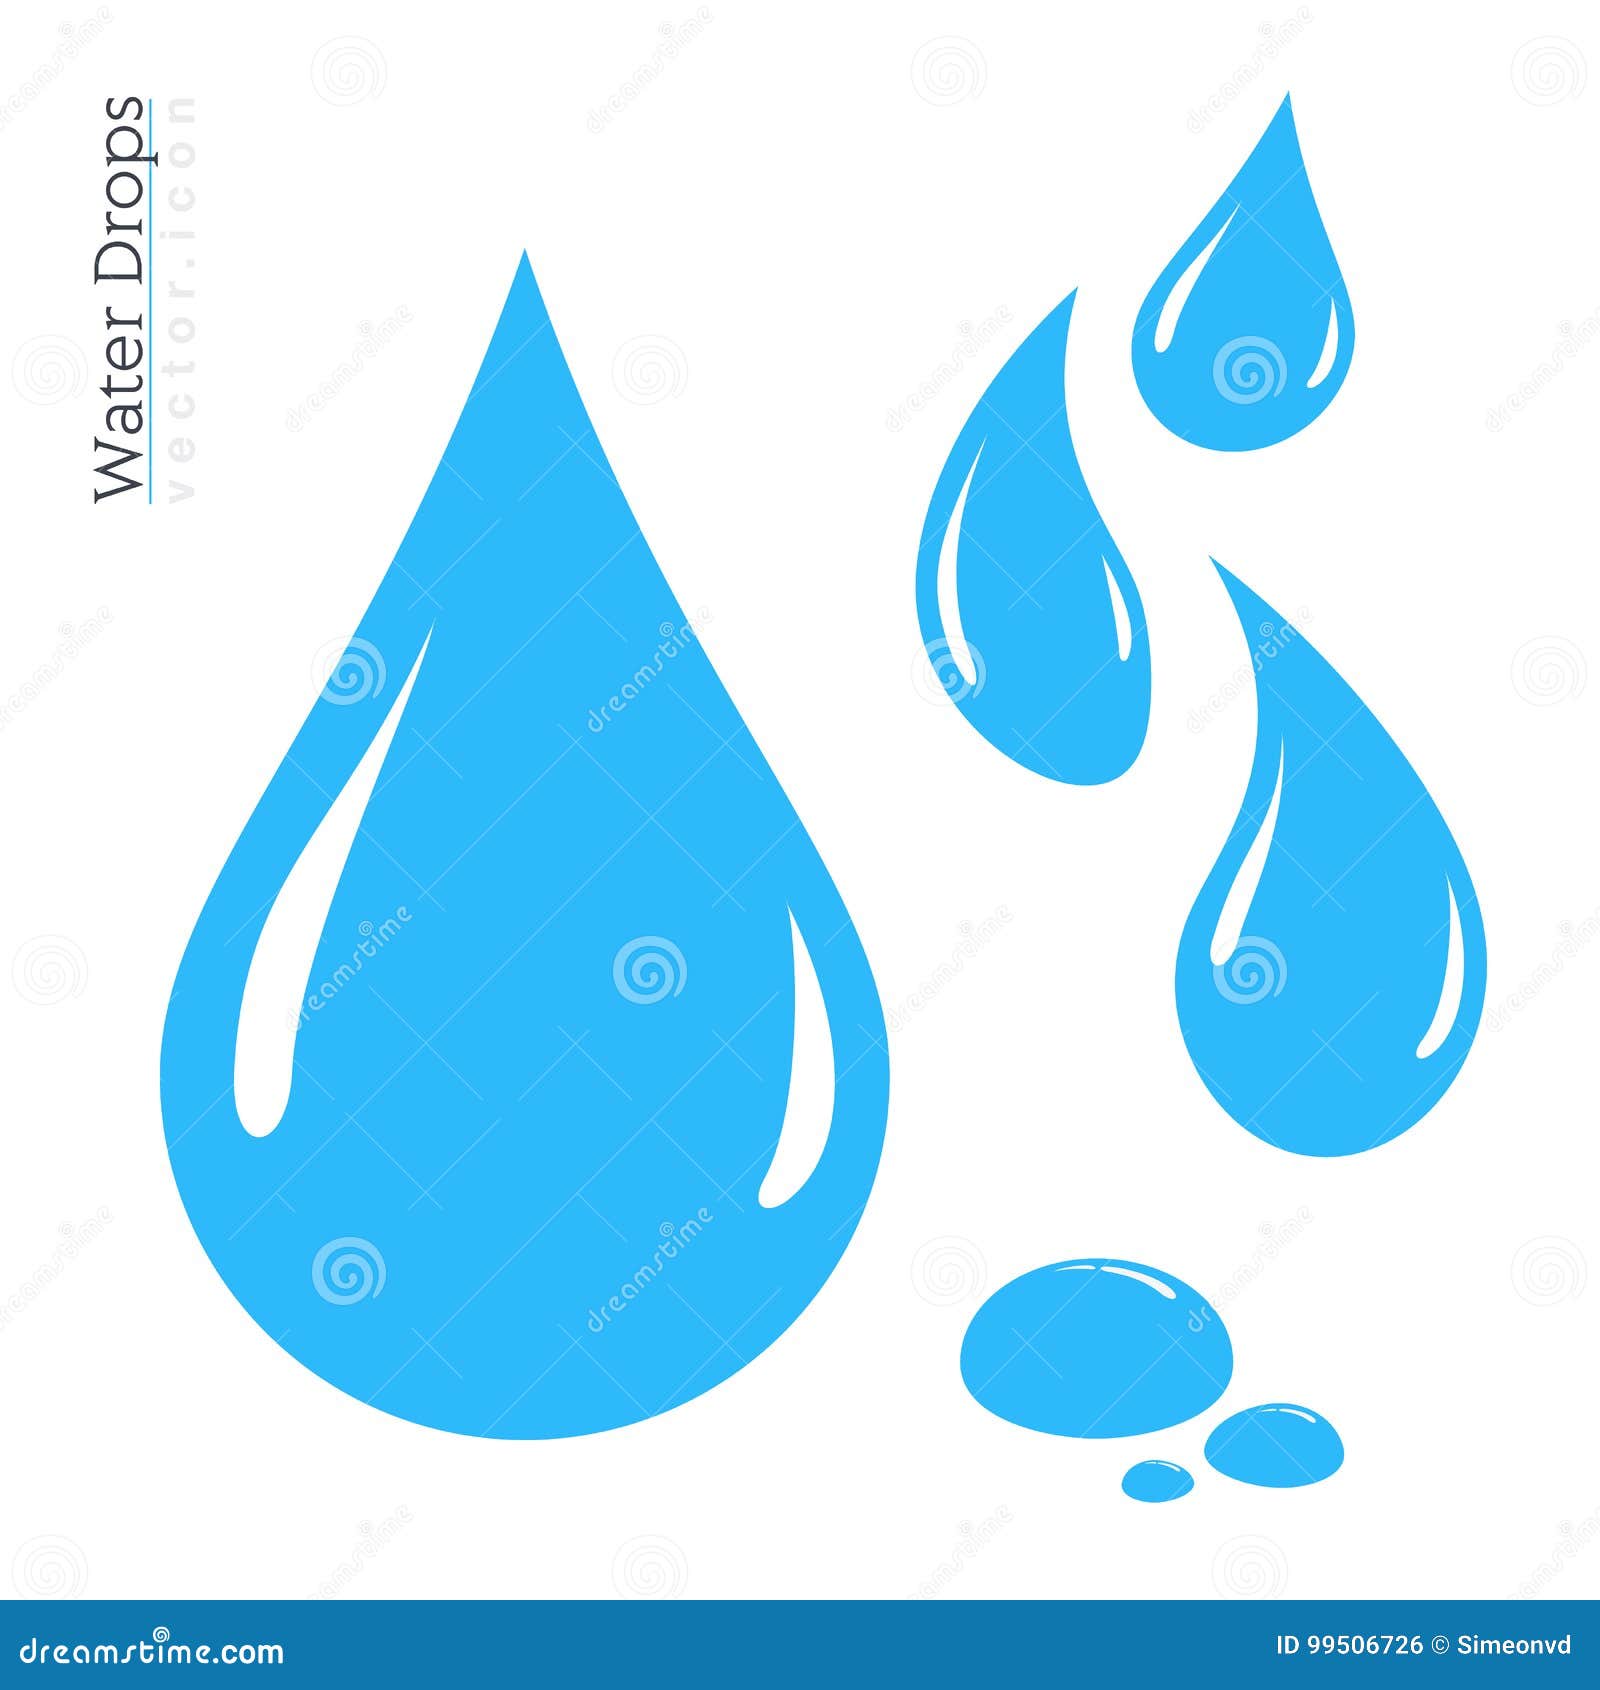 water drop icon set.  raindrop silhouette